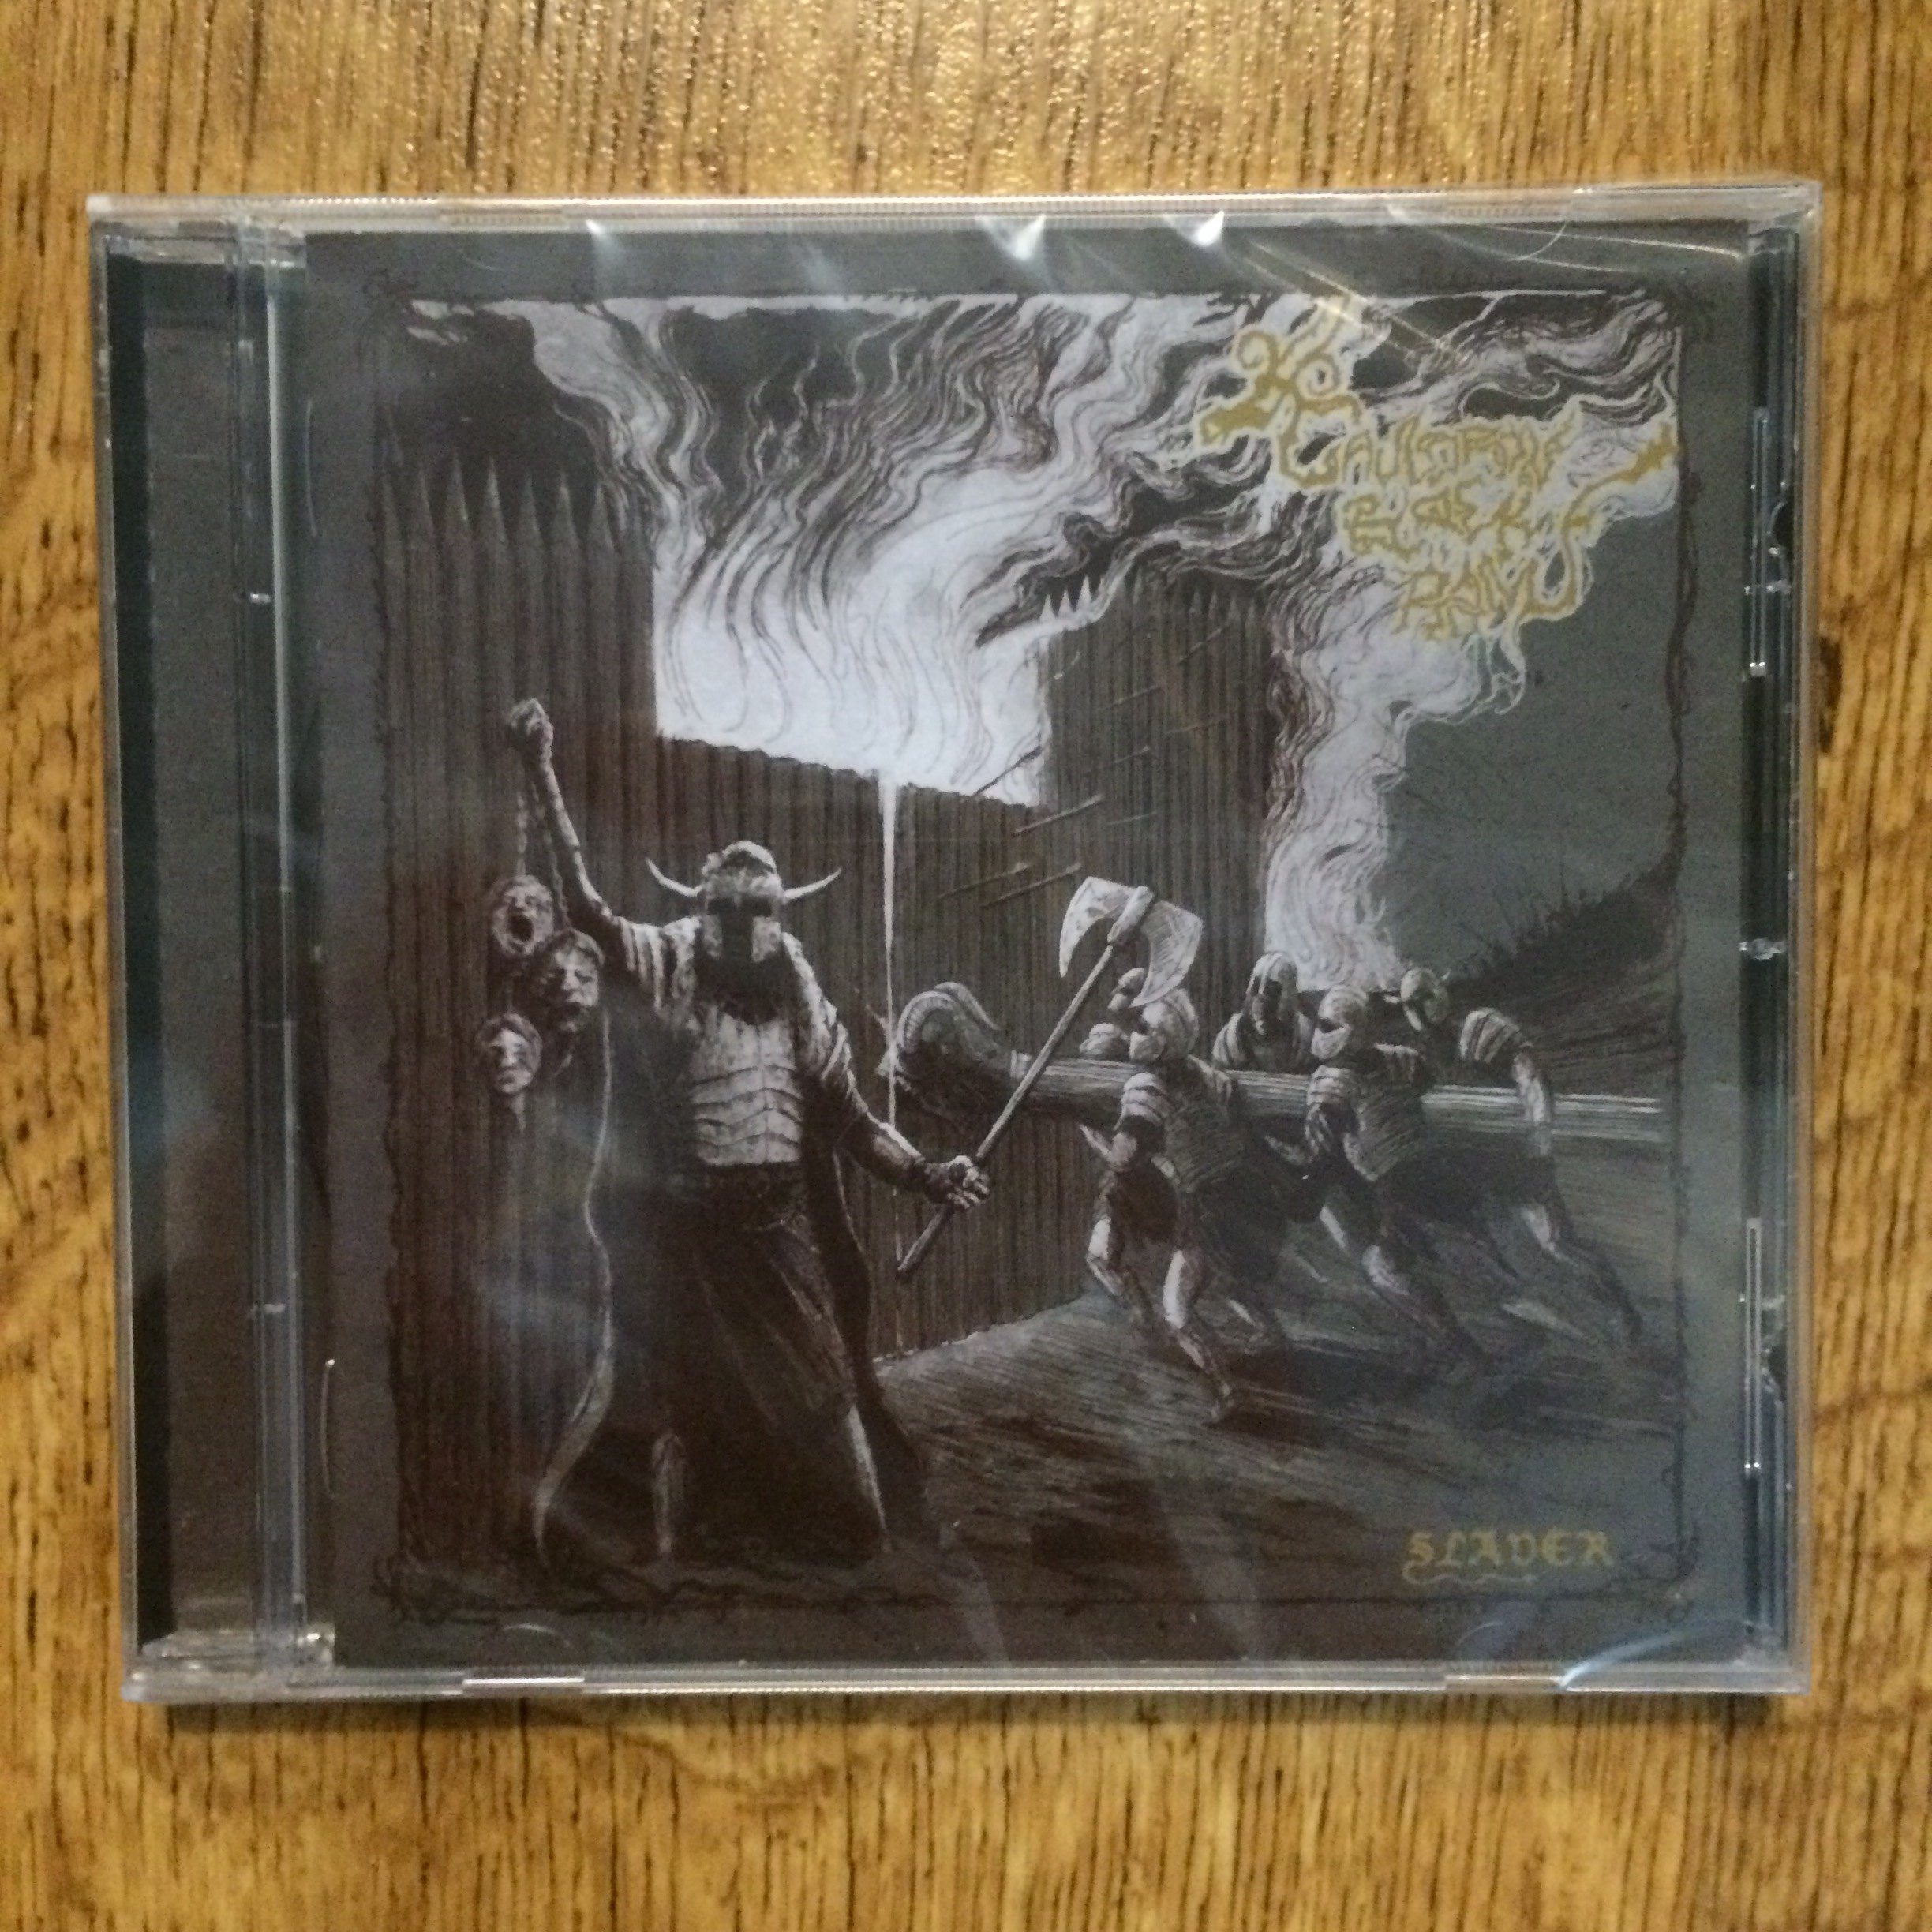 Photo of the Cauldron Black Ram - "Slaver" CD